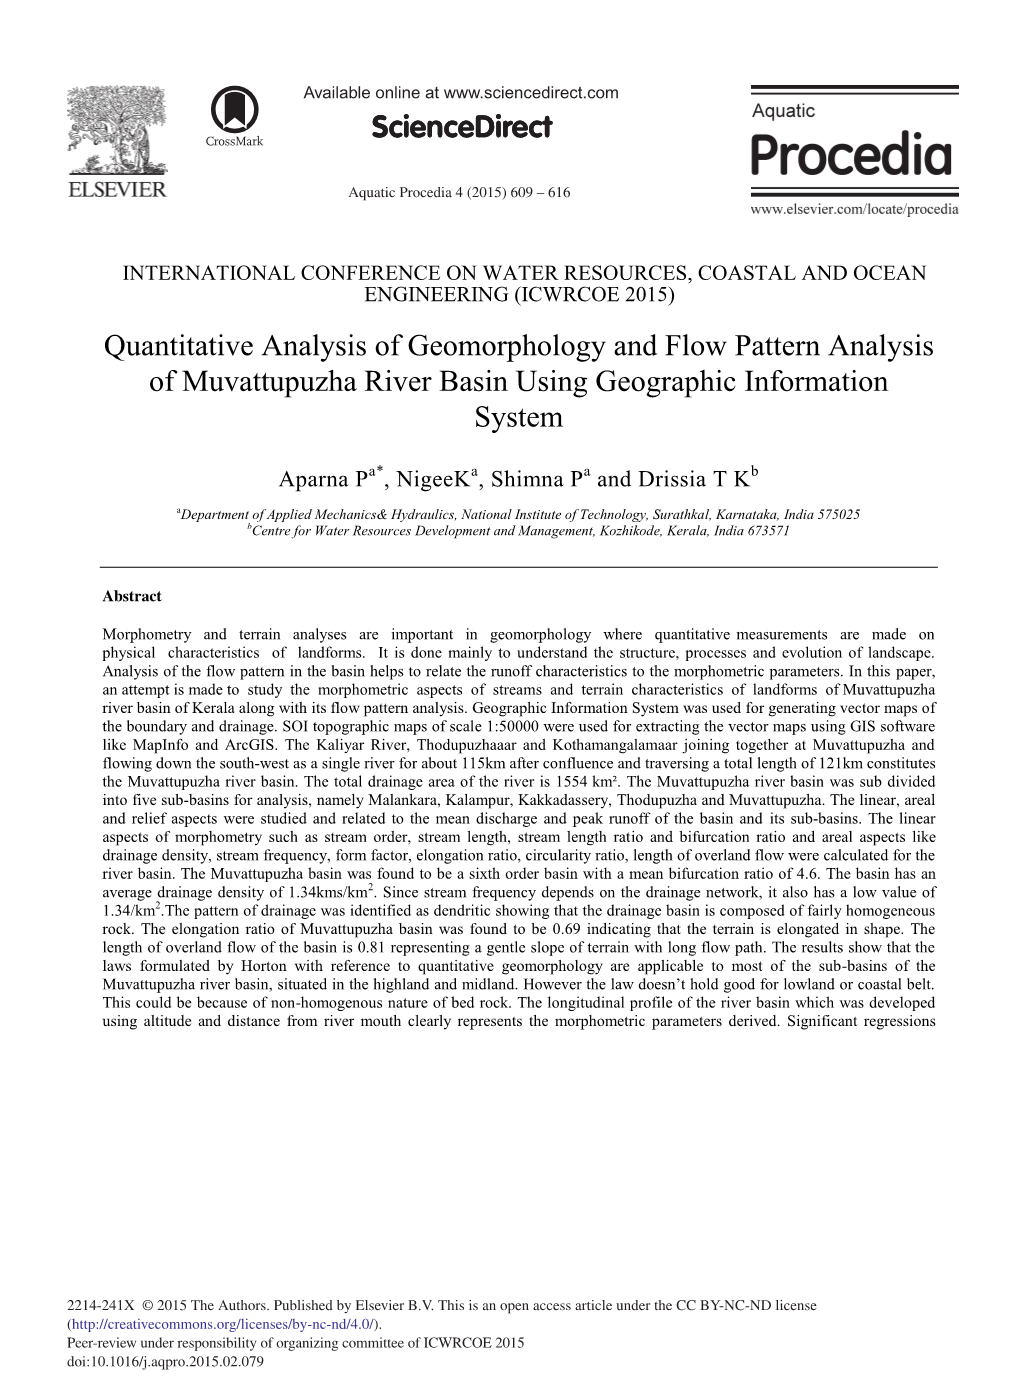 Quantitative Analysis of Geomorphology and Flow Pattern Analysis of Muvattupuzha River Basin Using Geographic Information System